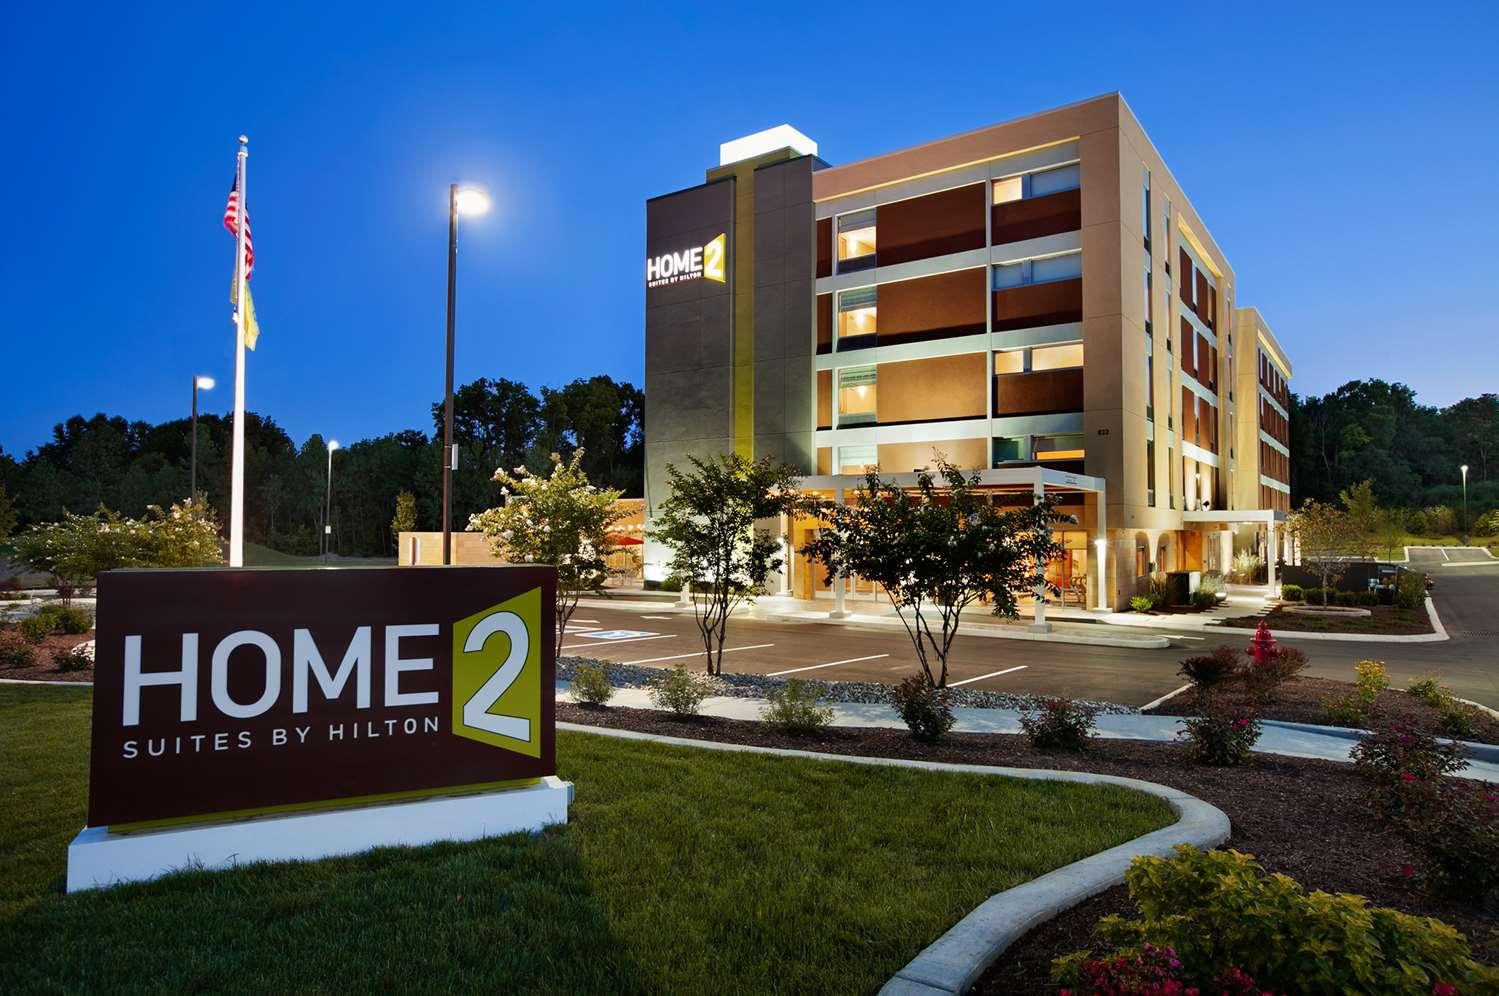 Home2 Suites by Hilton Nashville-Airport, TN in Nashville, TN